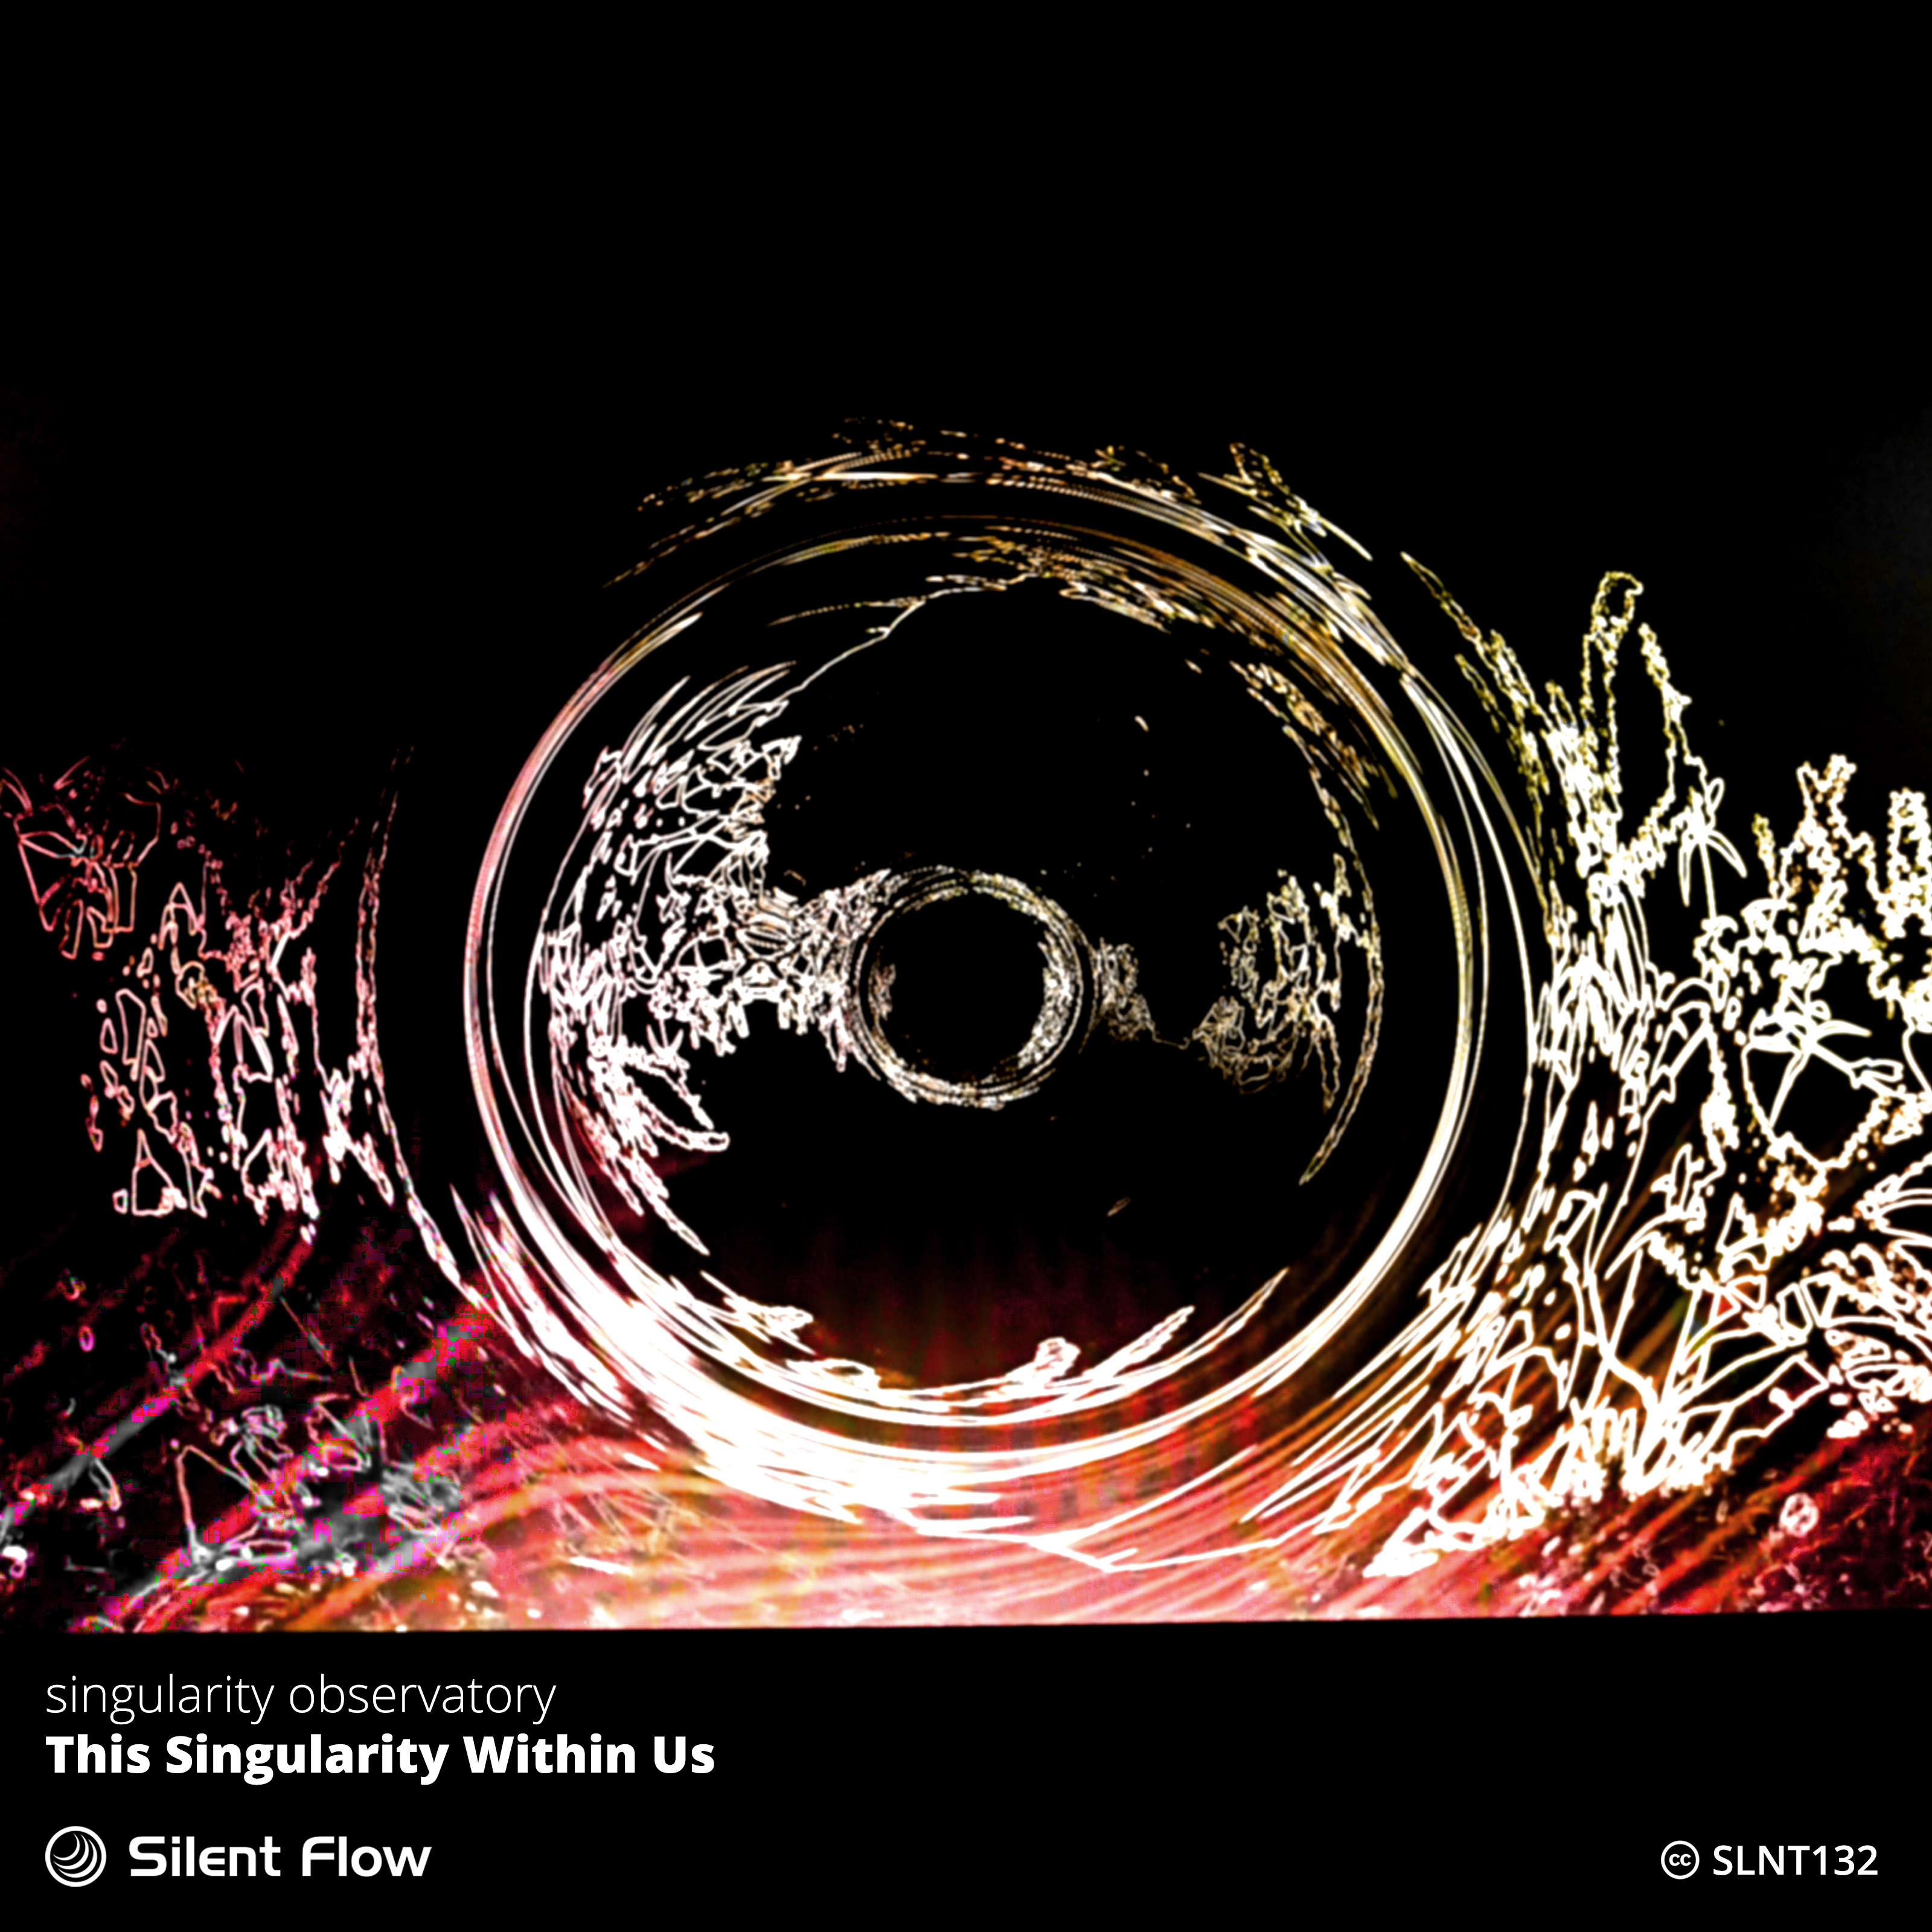 Singularity Observatory – This Singularity Within Us